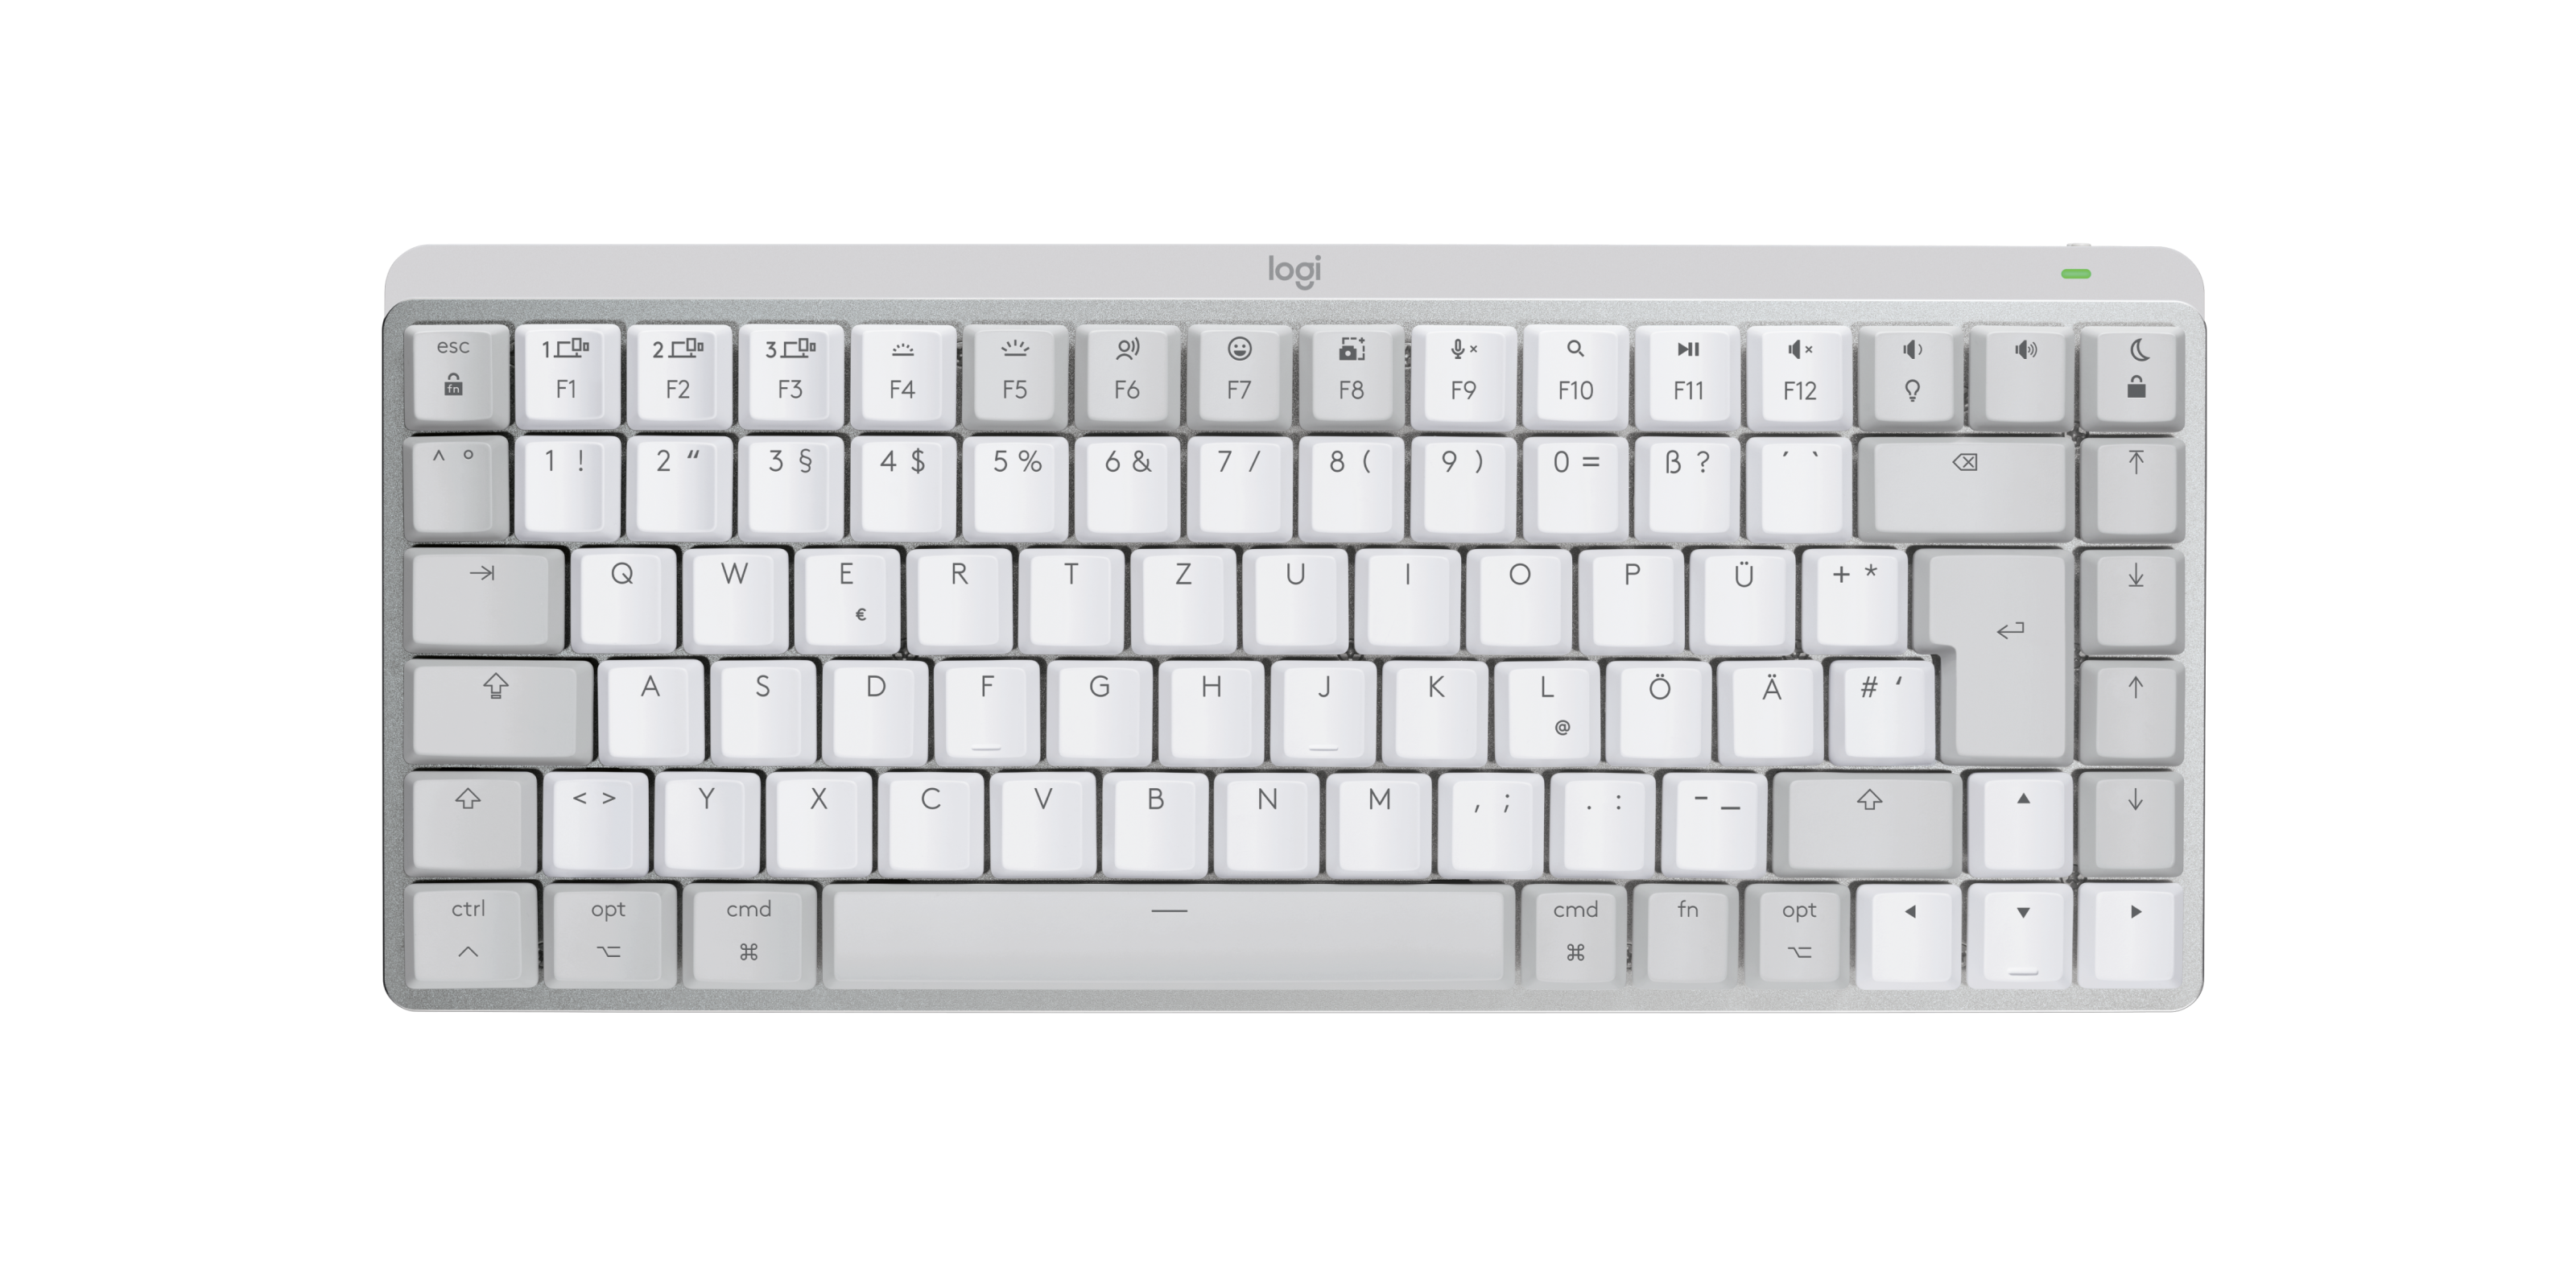 Apple Magic Keyboard - Clavier - Bluetooth - AZERTY - Français